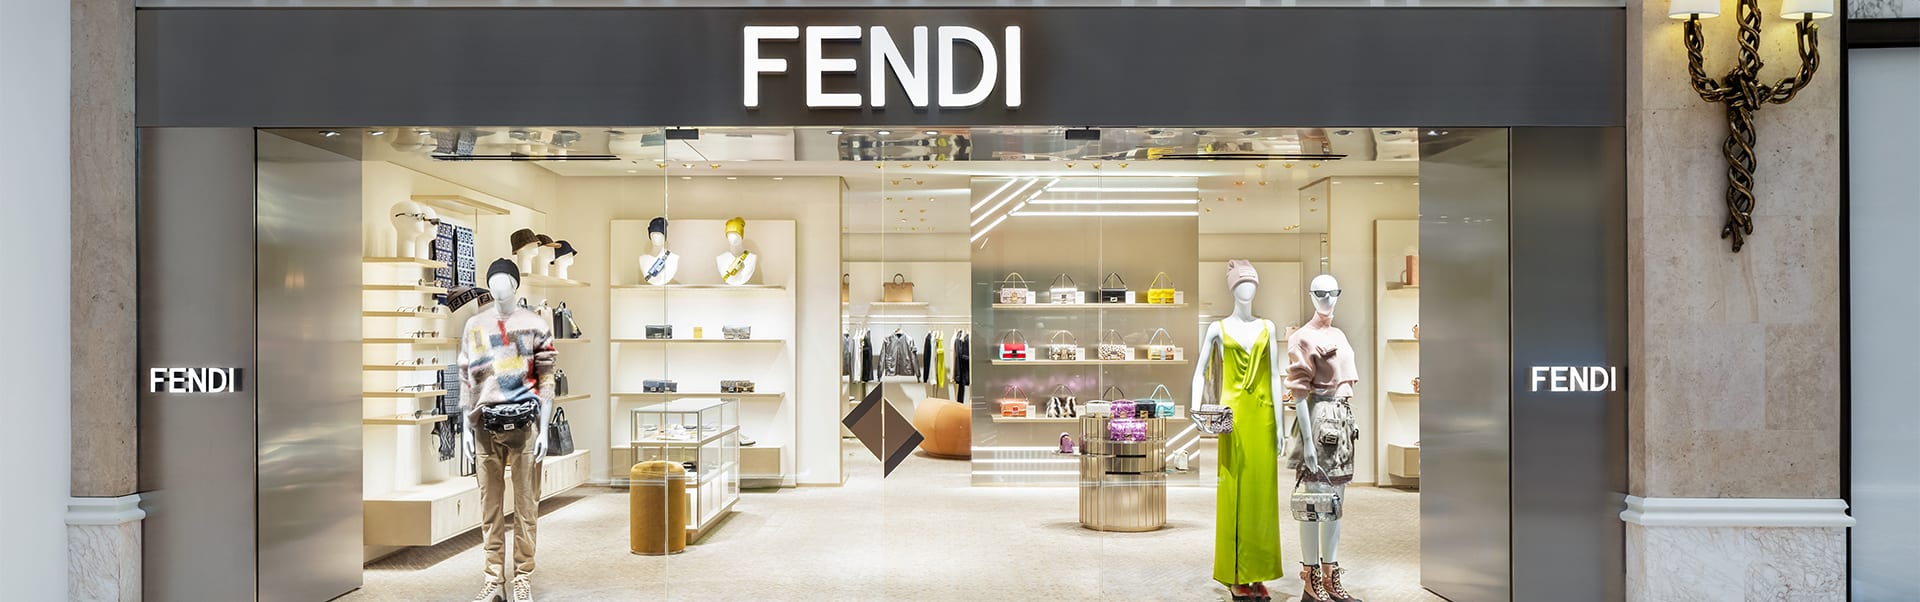 Do Fendi clothes run small? - Questions & Answers